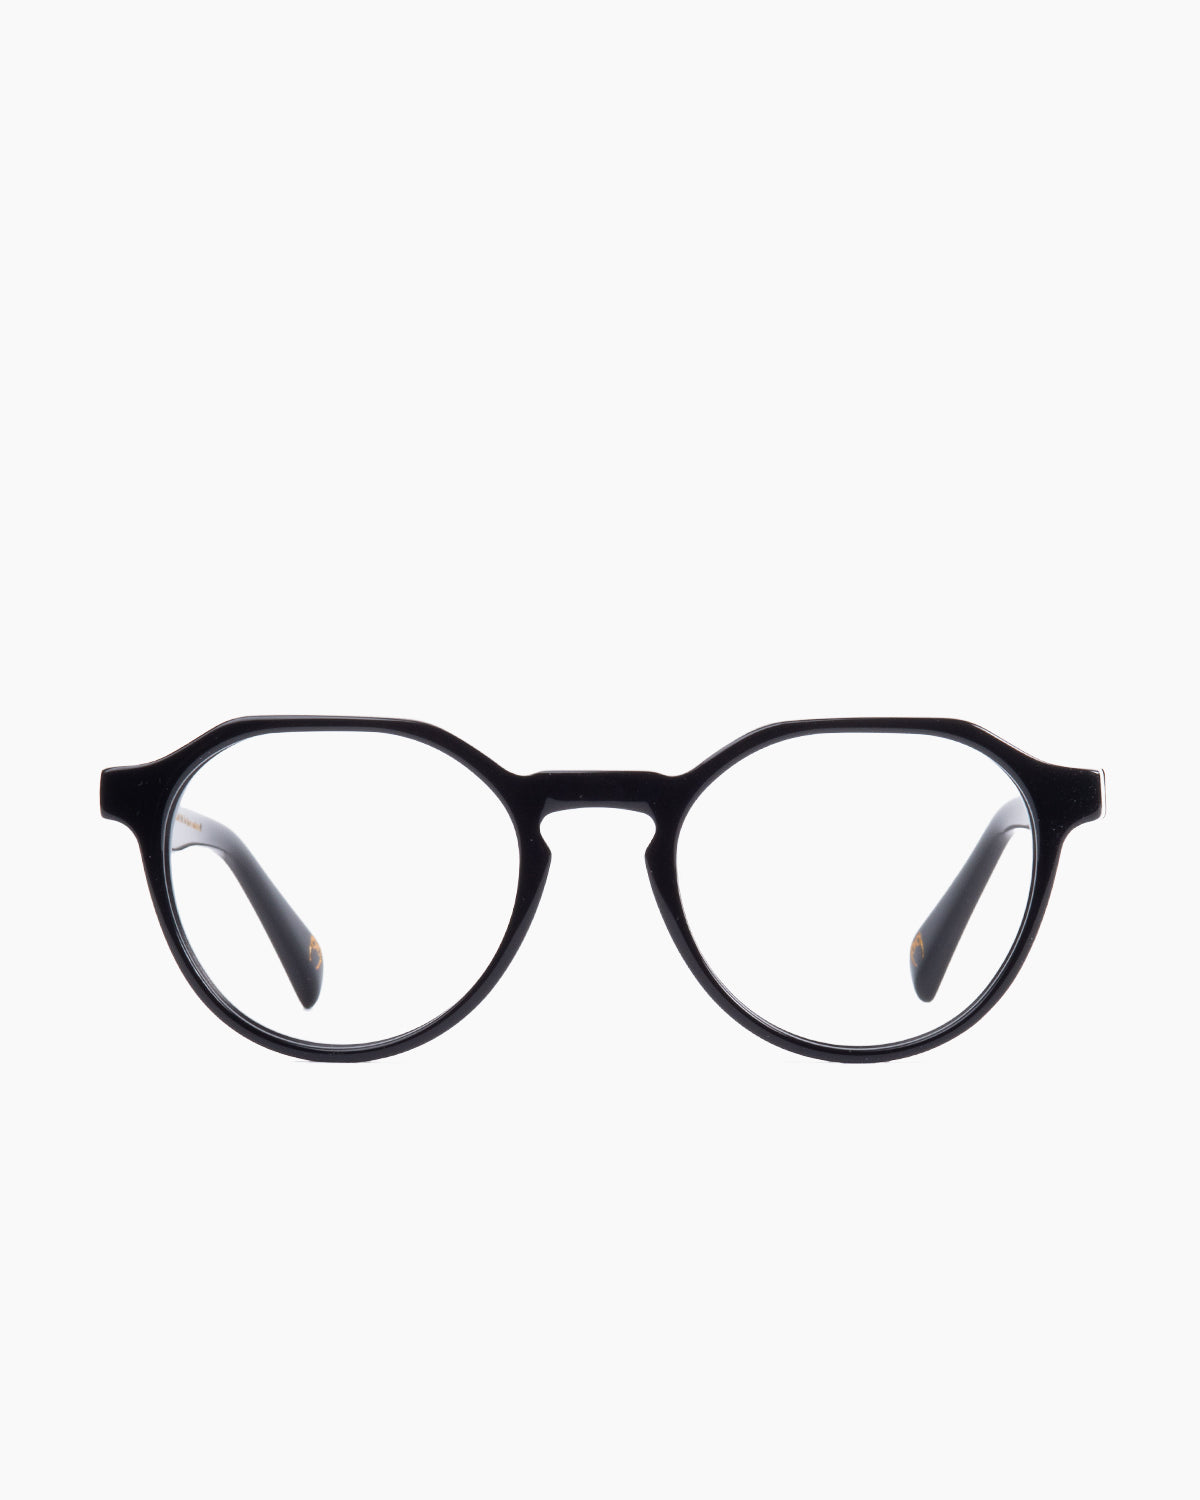 Spectacleeyeworks - Amir - 306 | glasses bar:  Marie-Sophie Dion